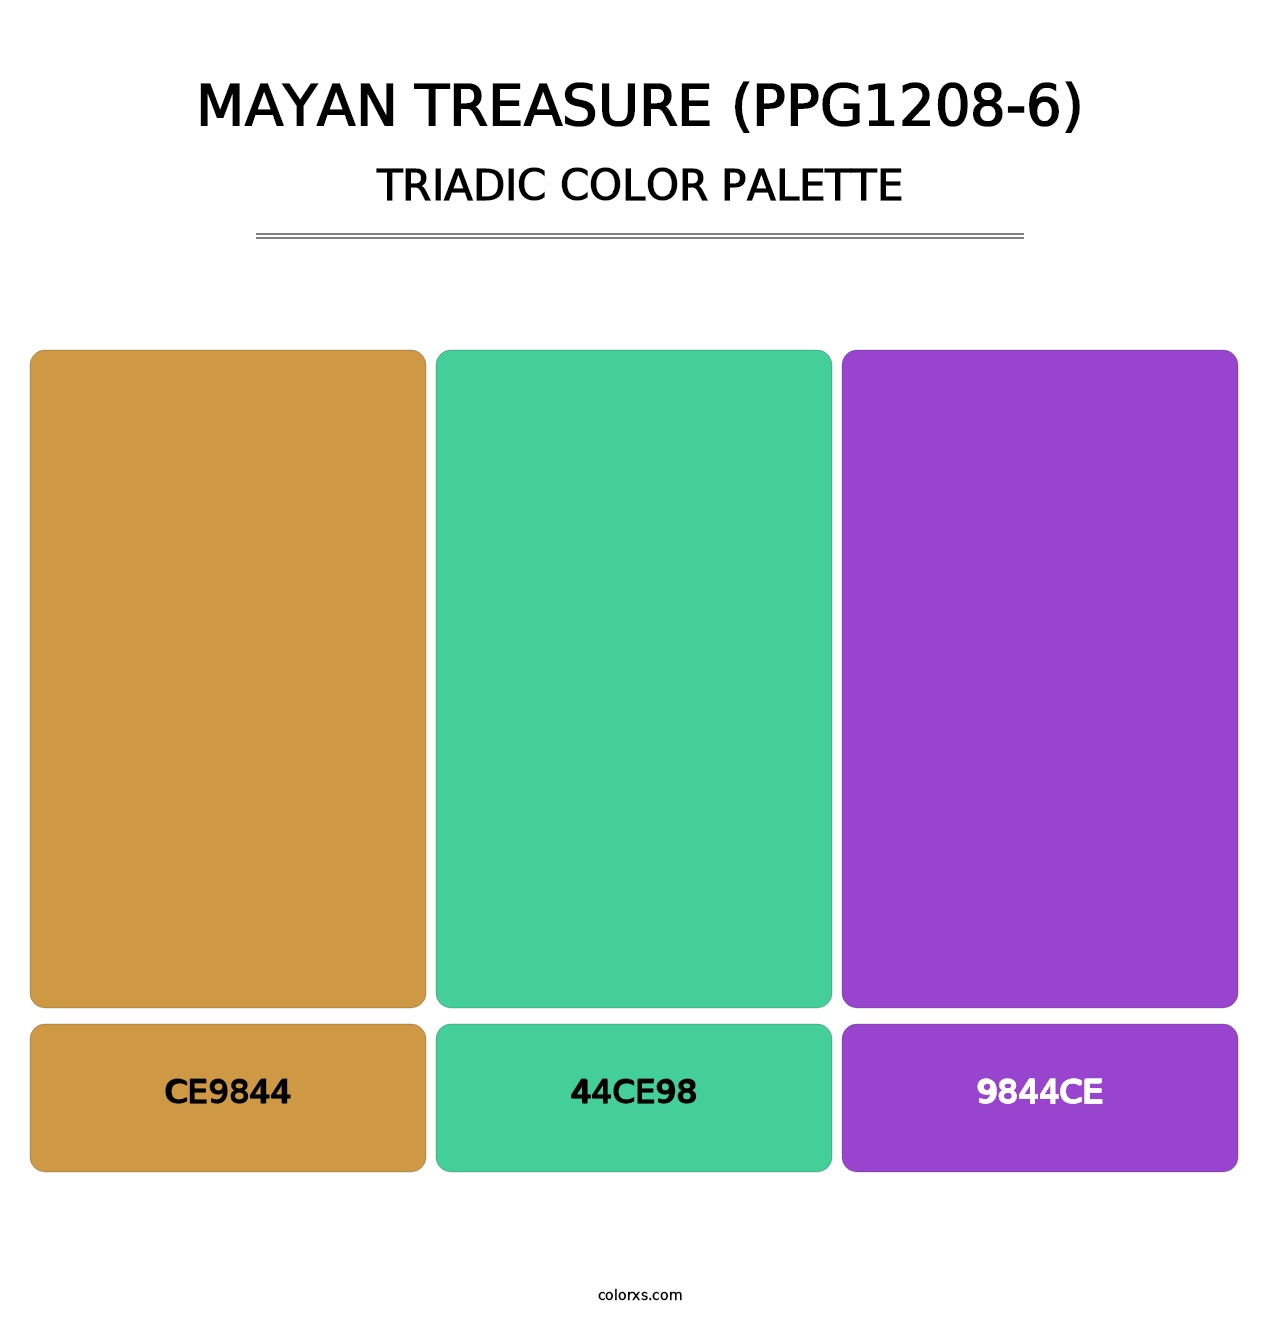 Mayan Treasure (PPG1208-6) - Triadic Color Palette